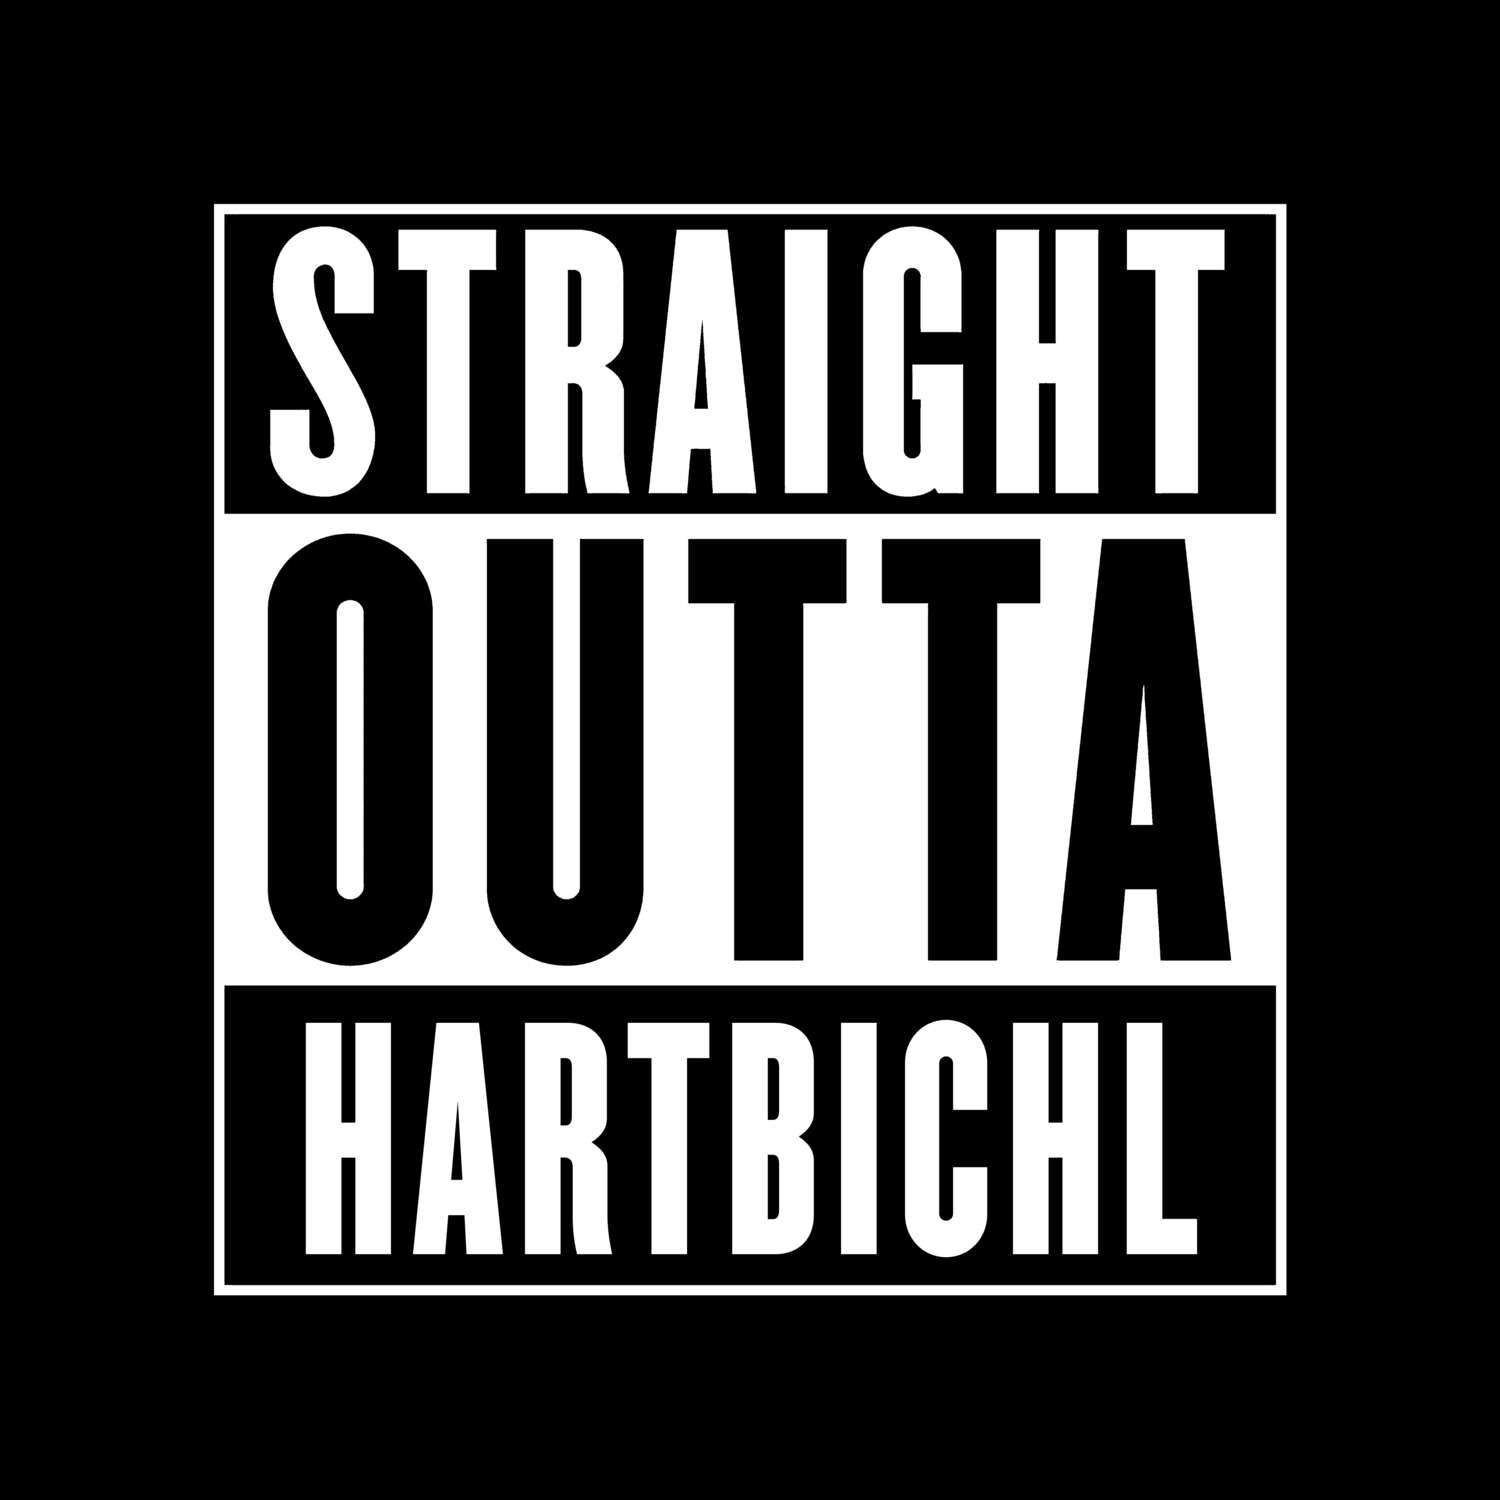 Hartbichl T-Shirt »Straight Outta«